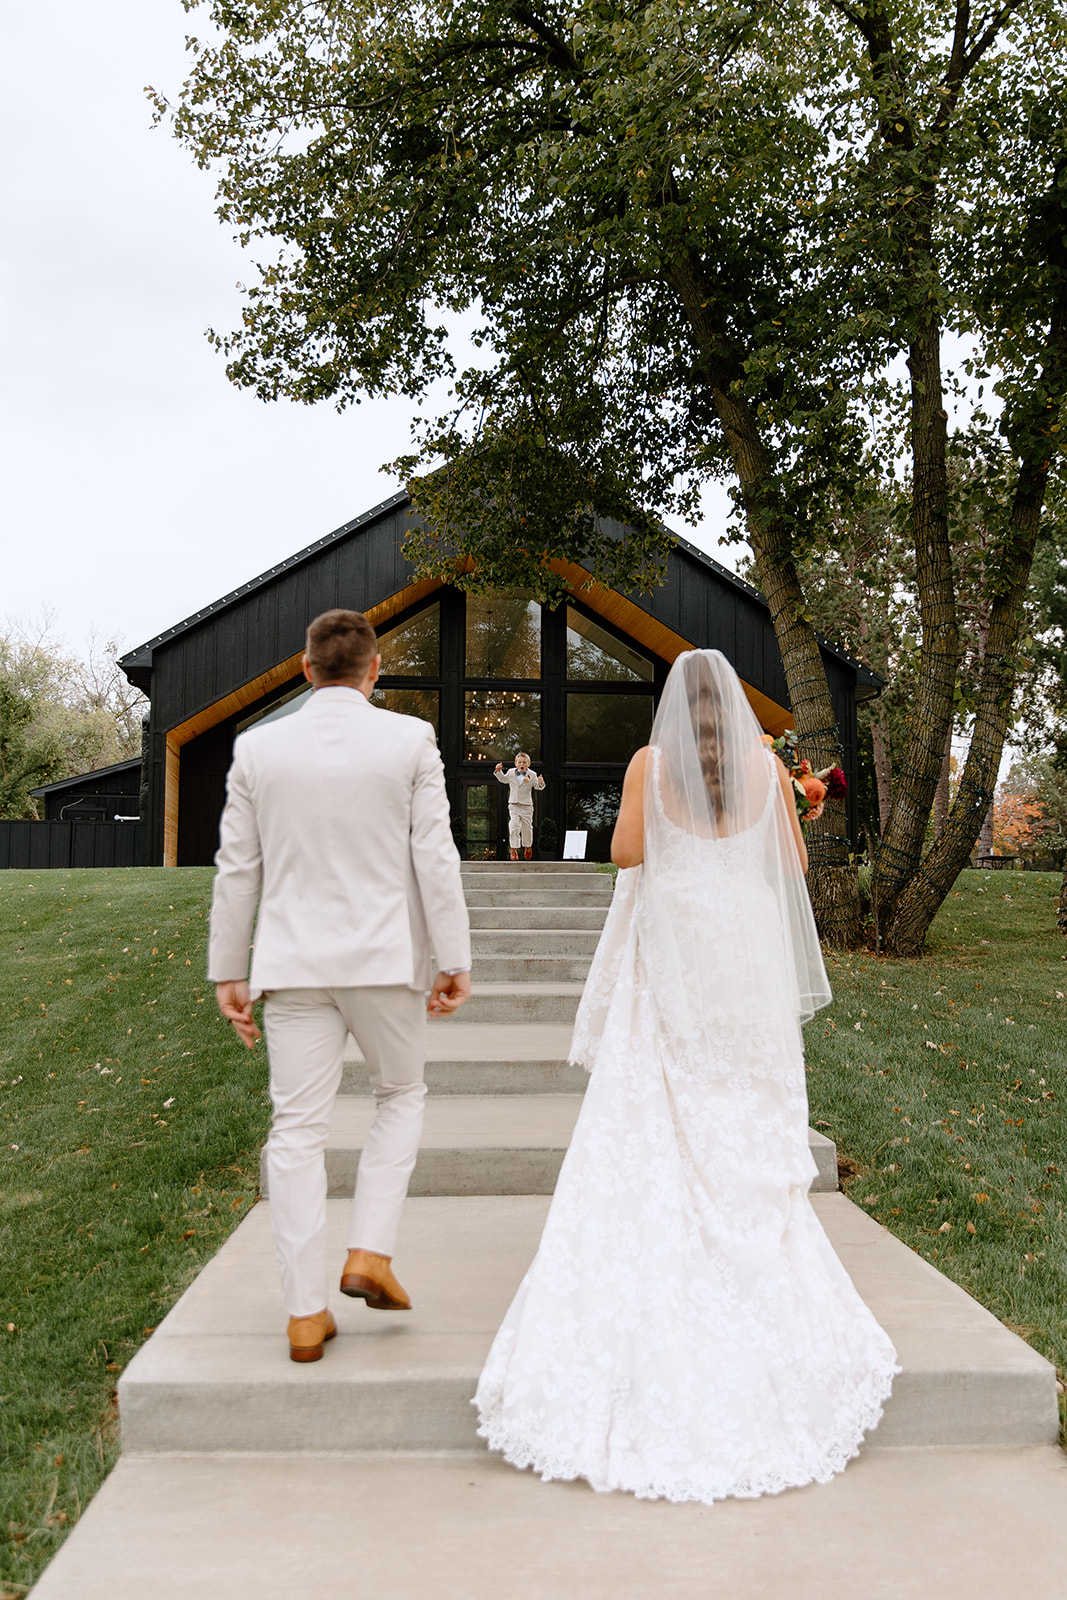 Bride and groom walk away from wedding ceremony